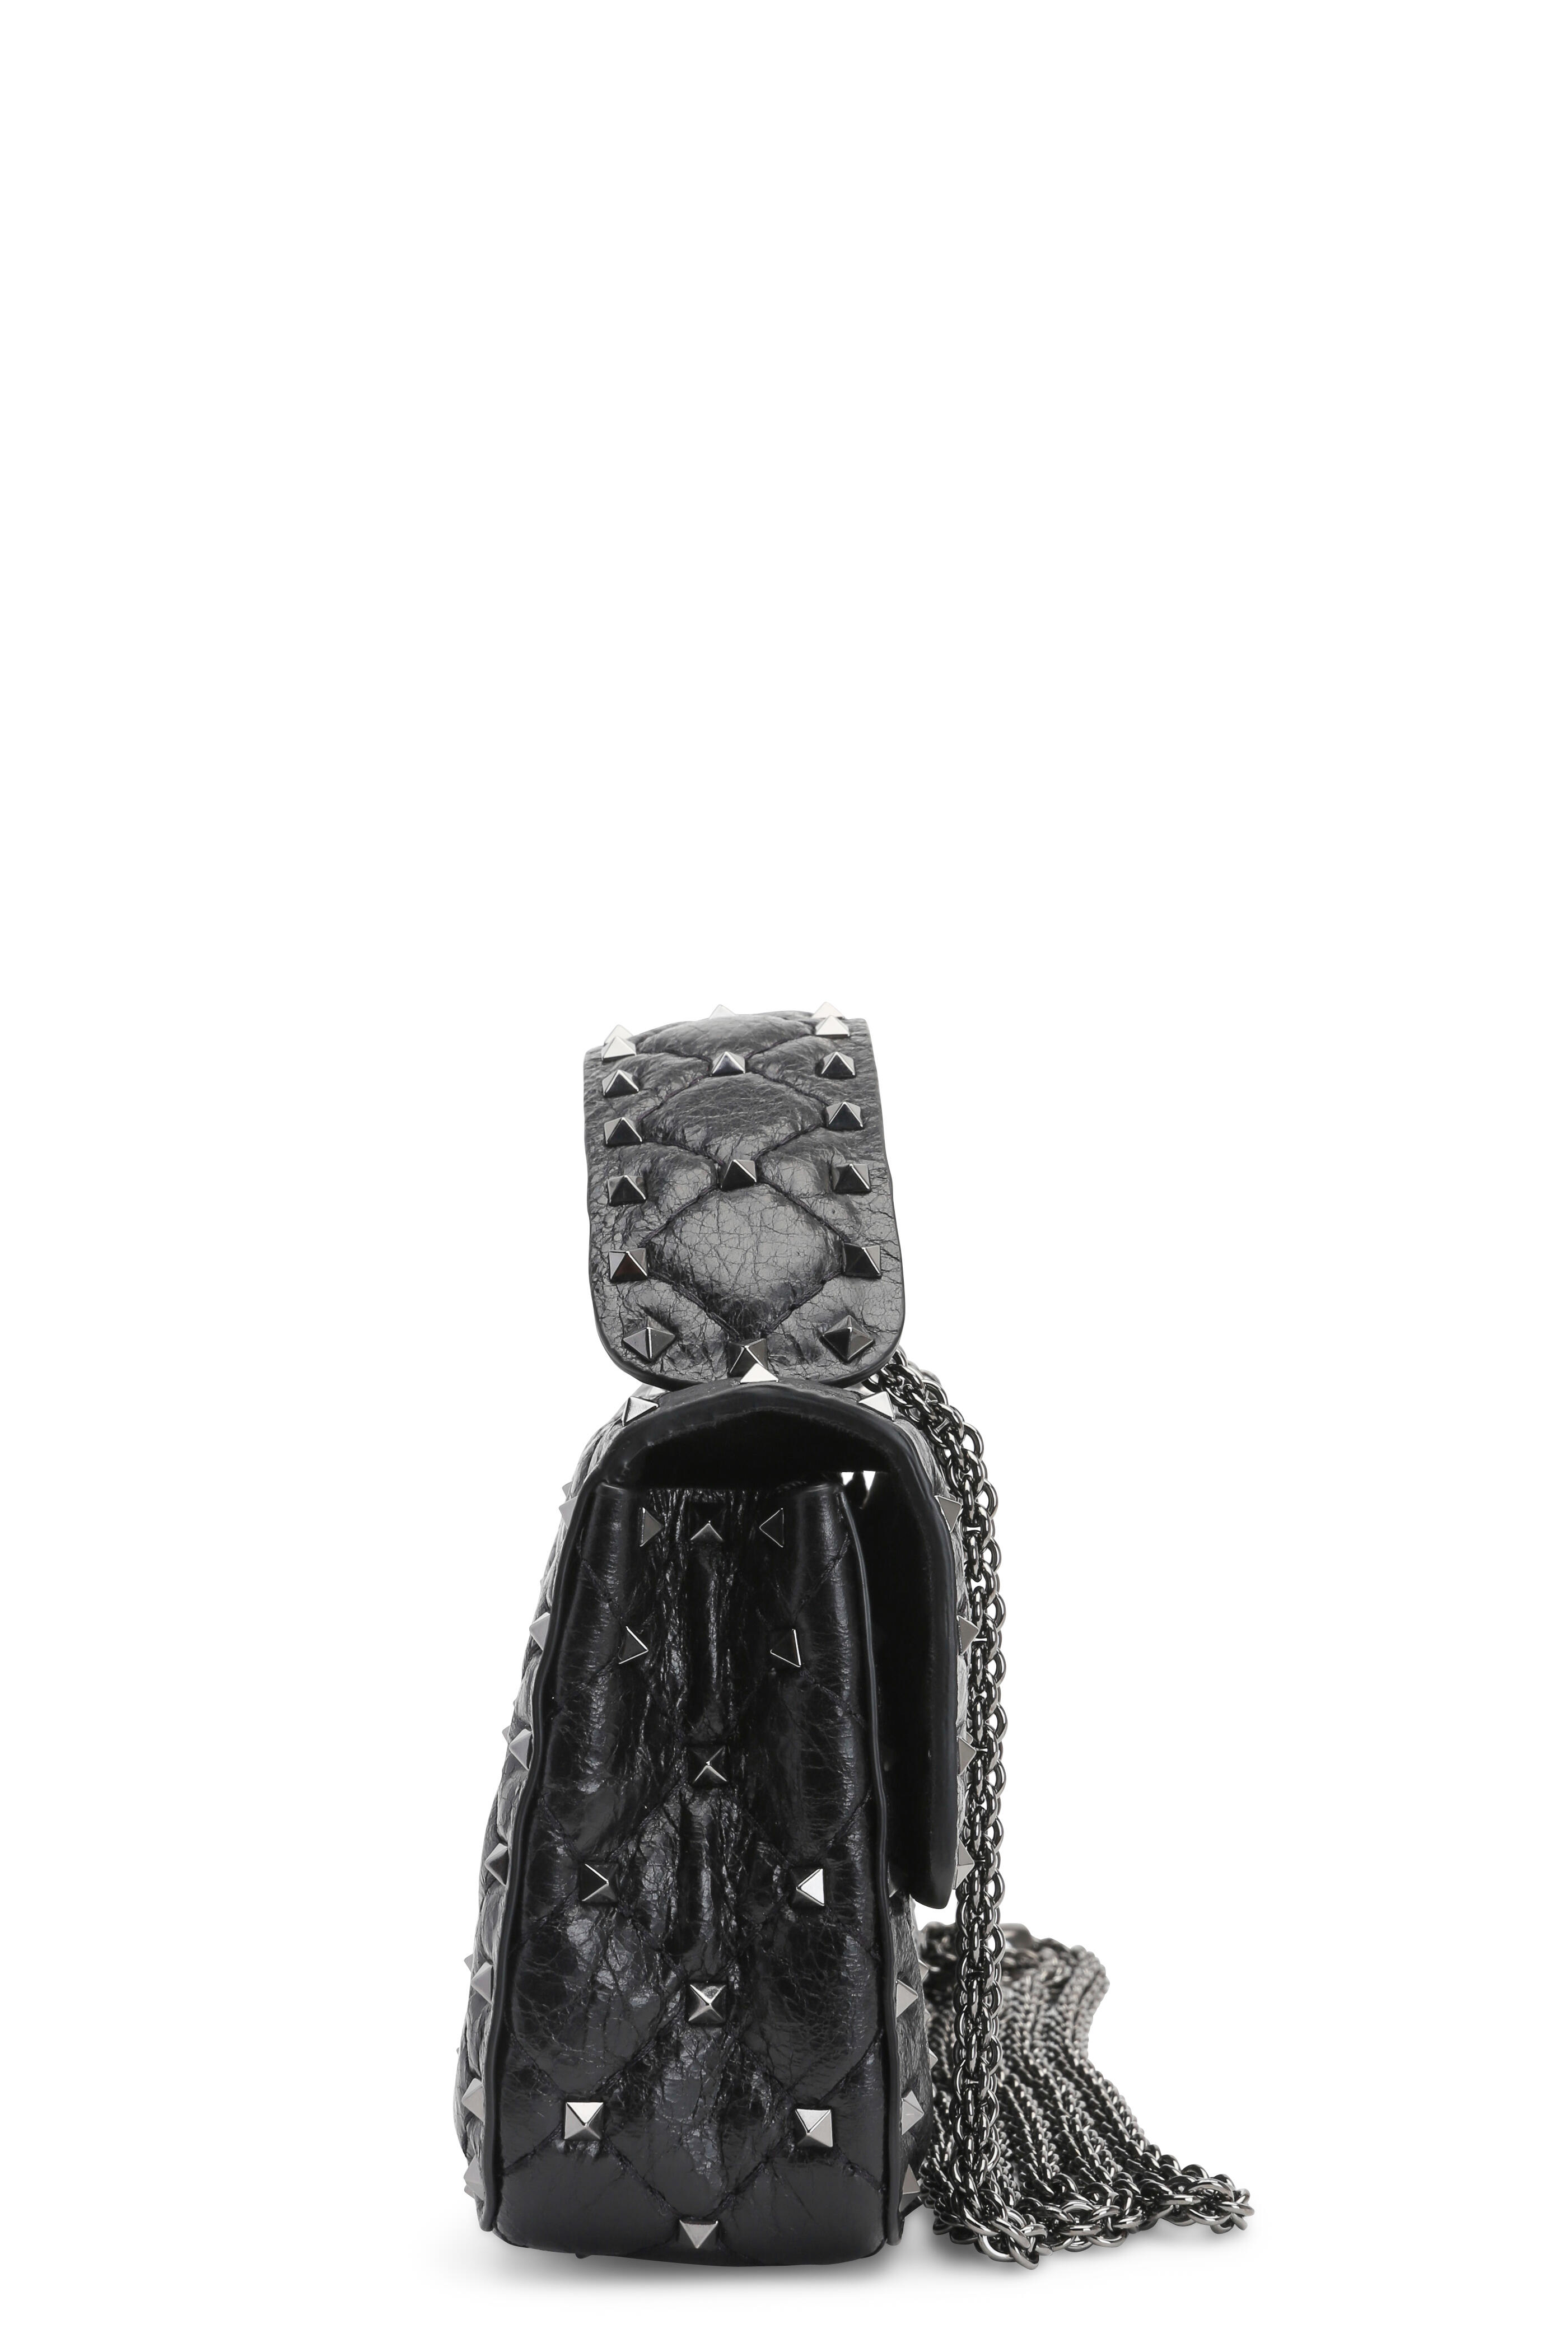 Black Rockstud Spike small leather shoulder bag, Valentino Garavani